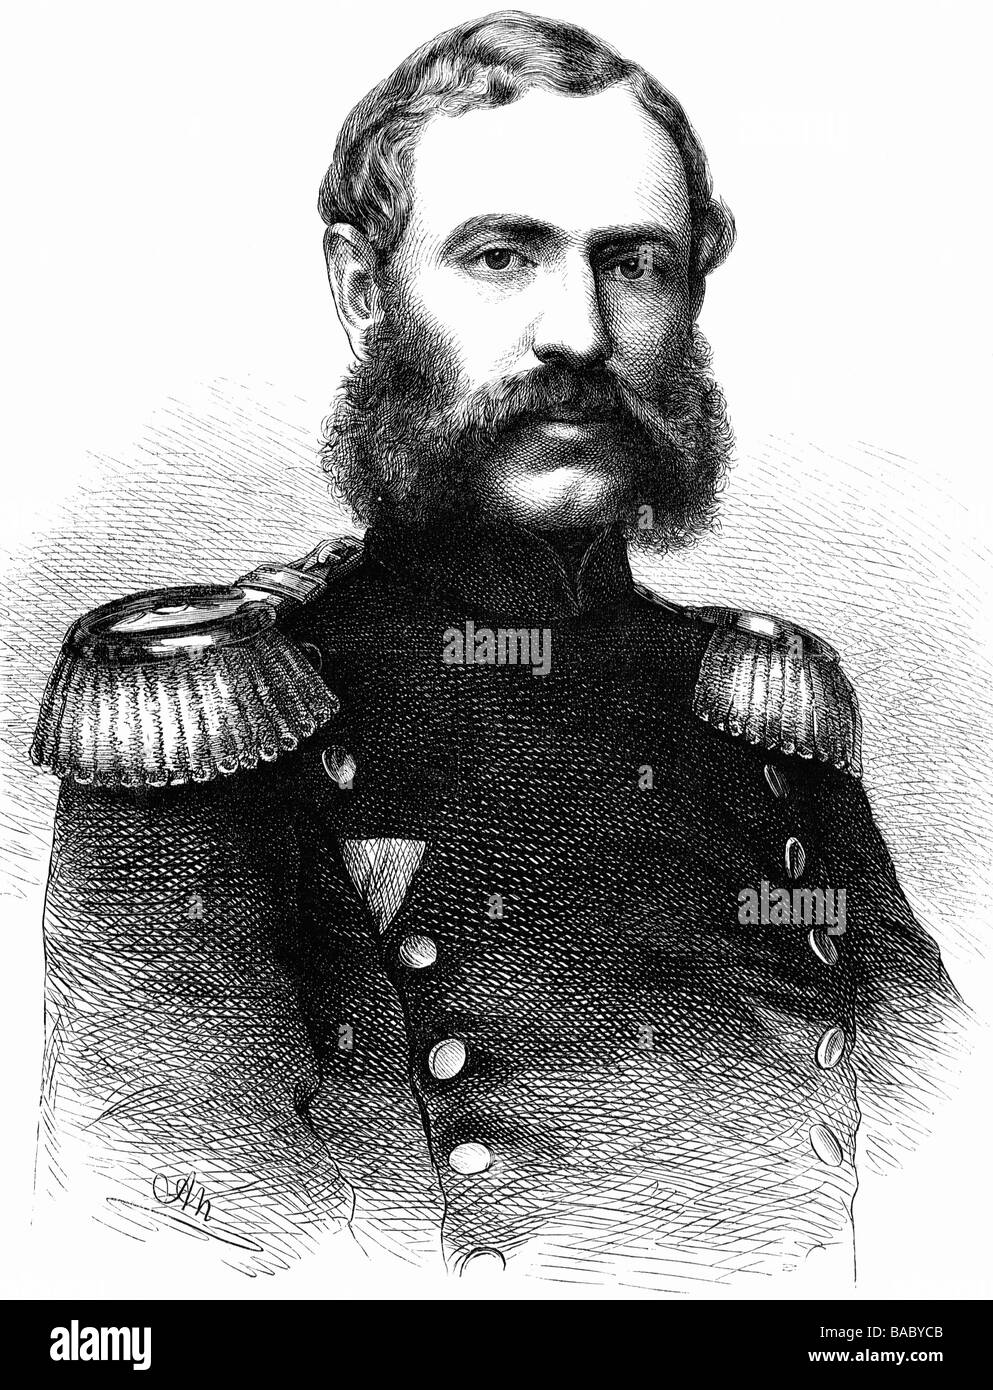 Albert I, 23.4.1828 - 19.4.1902, king of Saxony 29.10.1873 - 19.6.1902, portrait, wood engraving by Adolf Neumann (1825 - 1884), circa 1865, Stock Photo